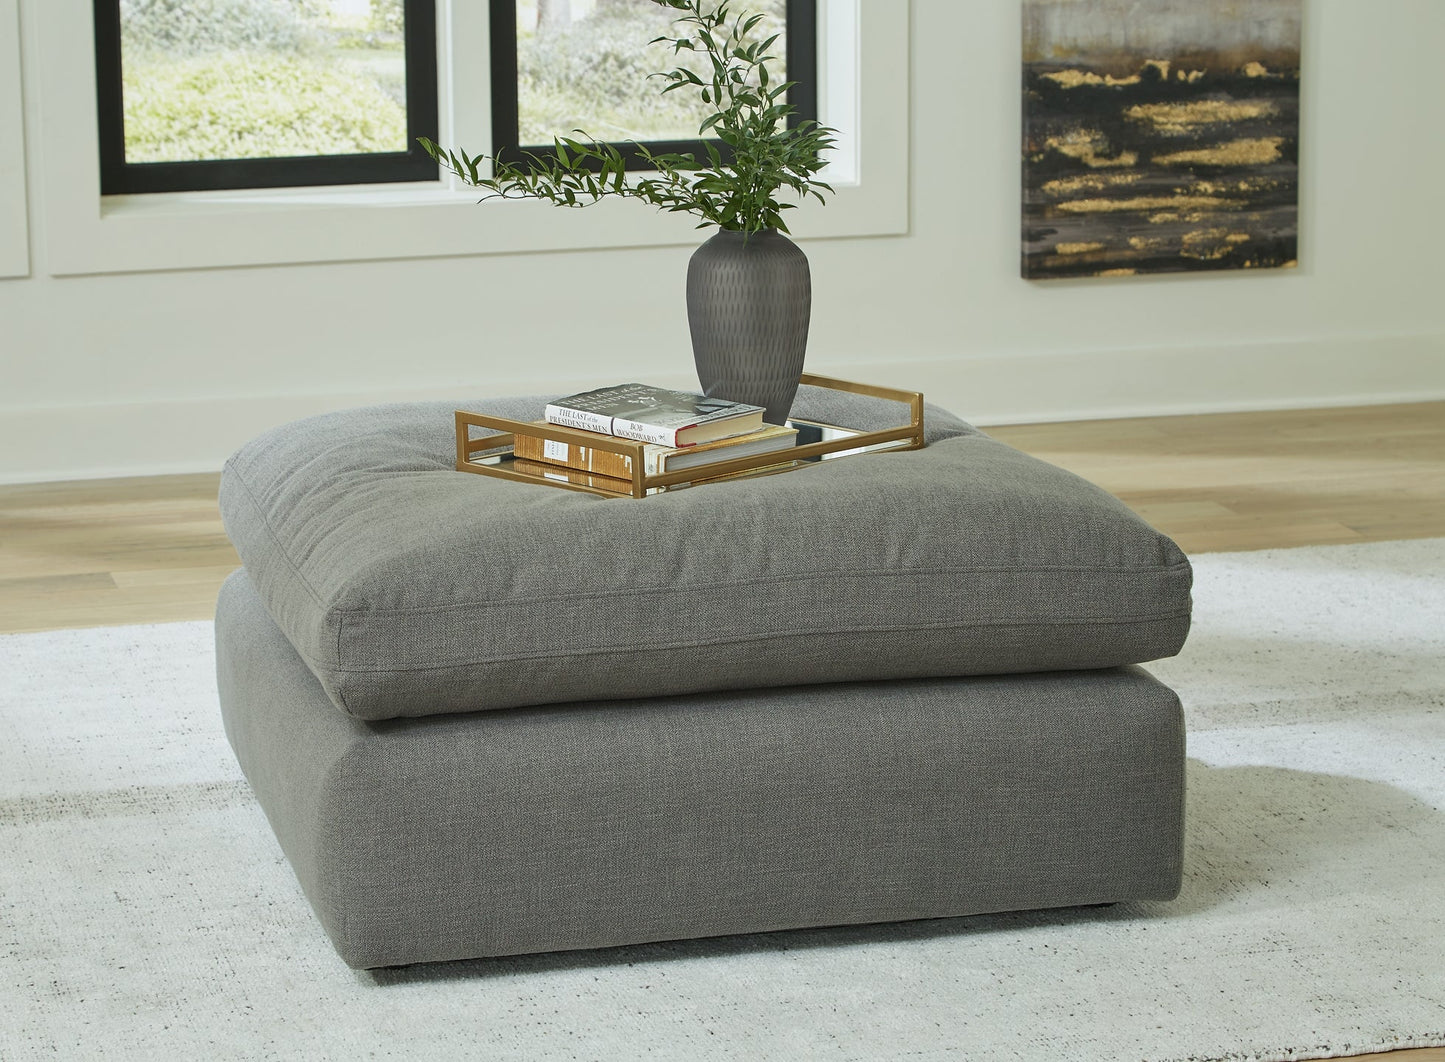 Elyza Oversized Accent Ottoman at Cloud 9 Mattress & Furniture furniture, home furnishing, home decor